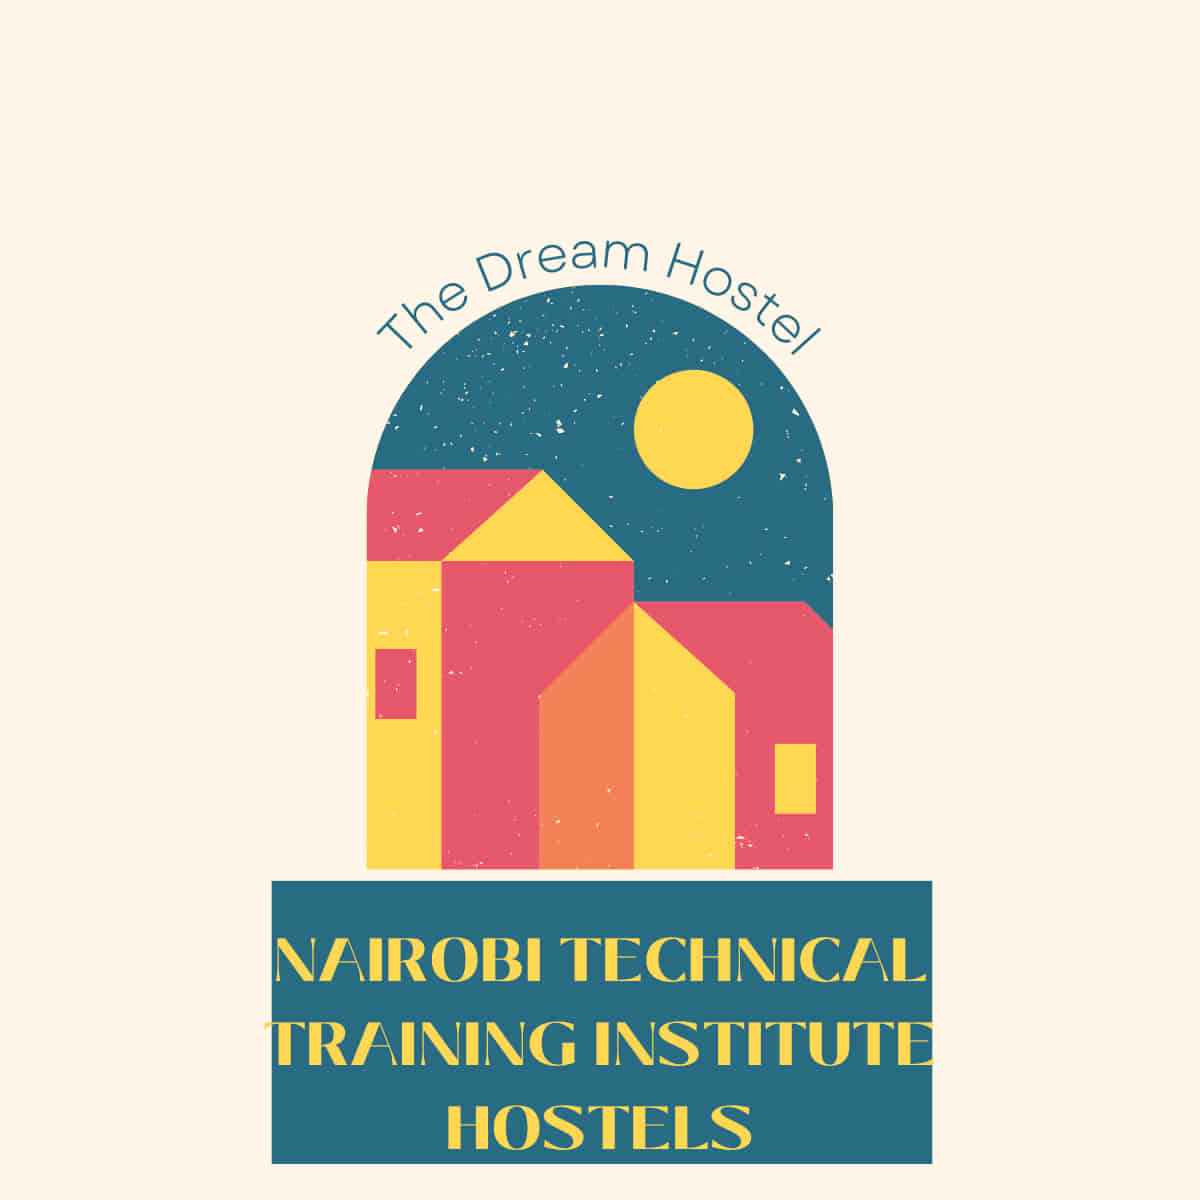 Nairobi technical training institute hostels